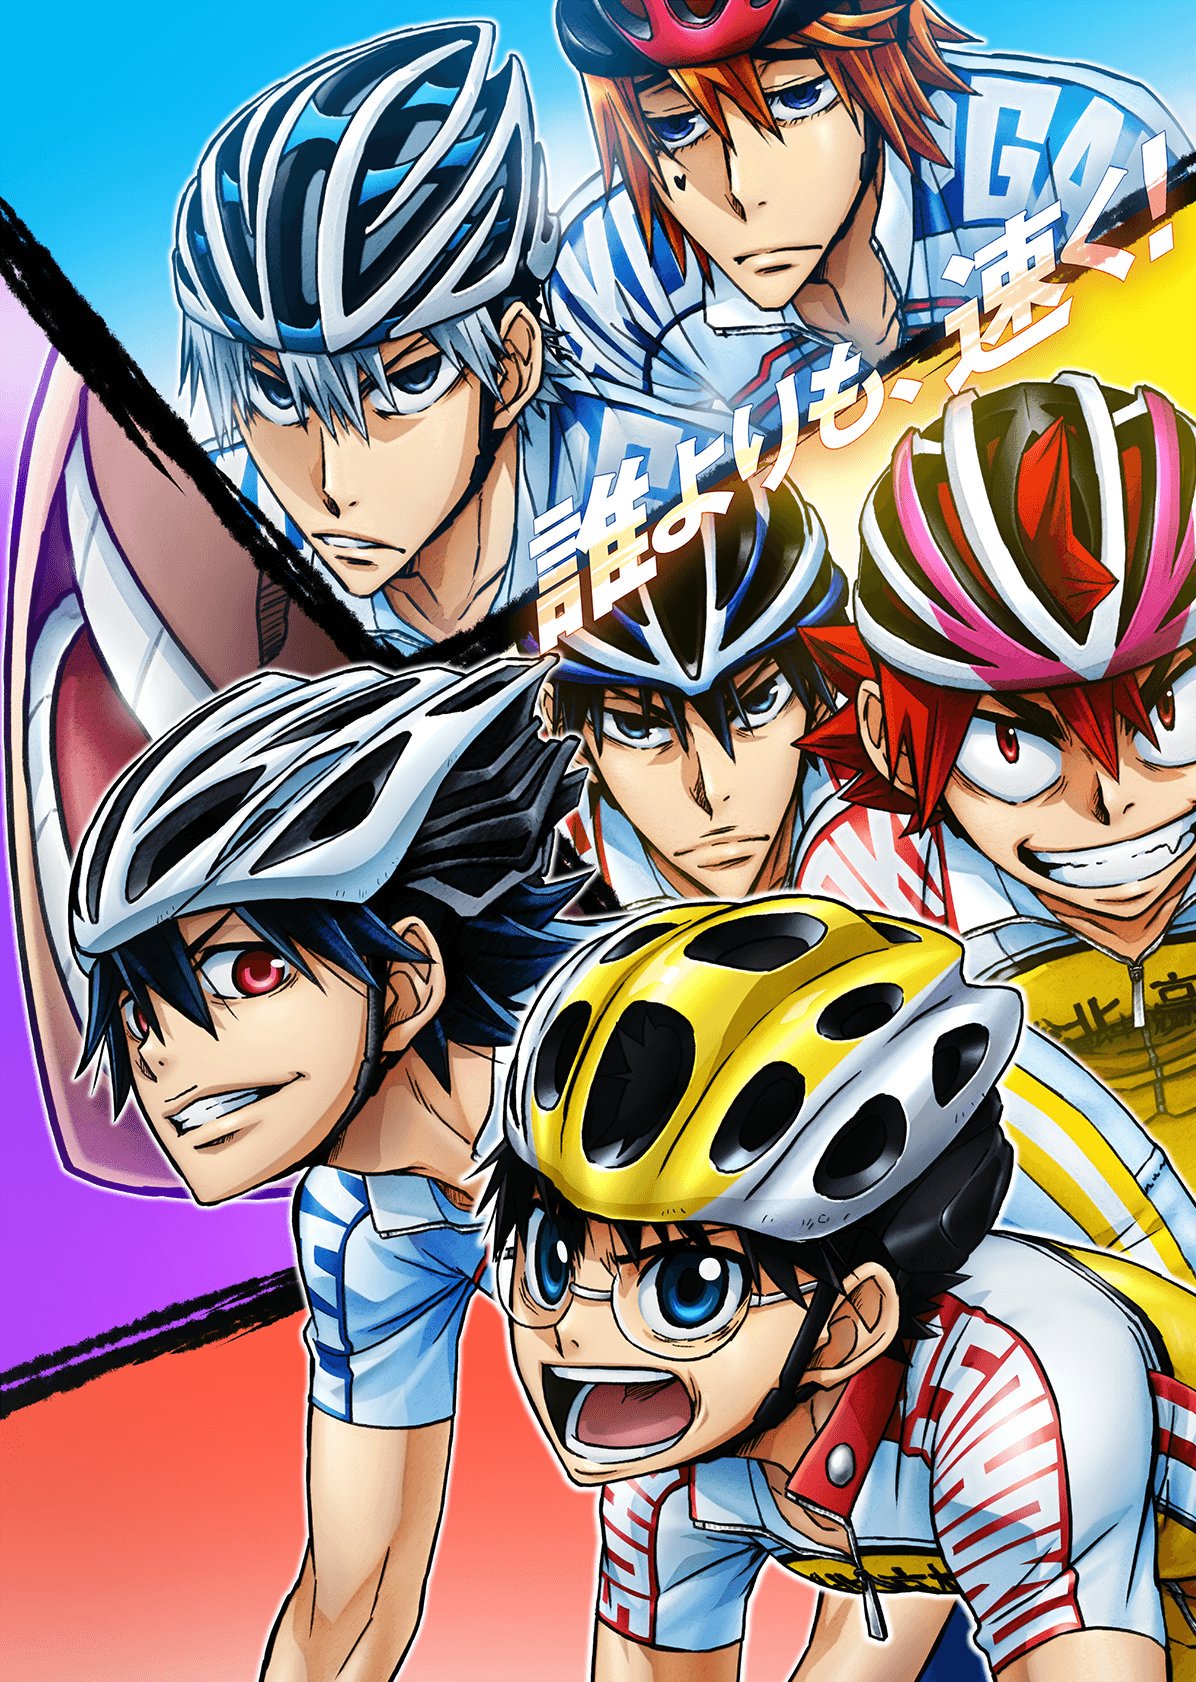 Yowamushi Pedal Glory Line الحلقة 11 مترجمة الموسم الرابع اون لاين Shahiid Anime